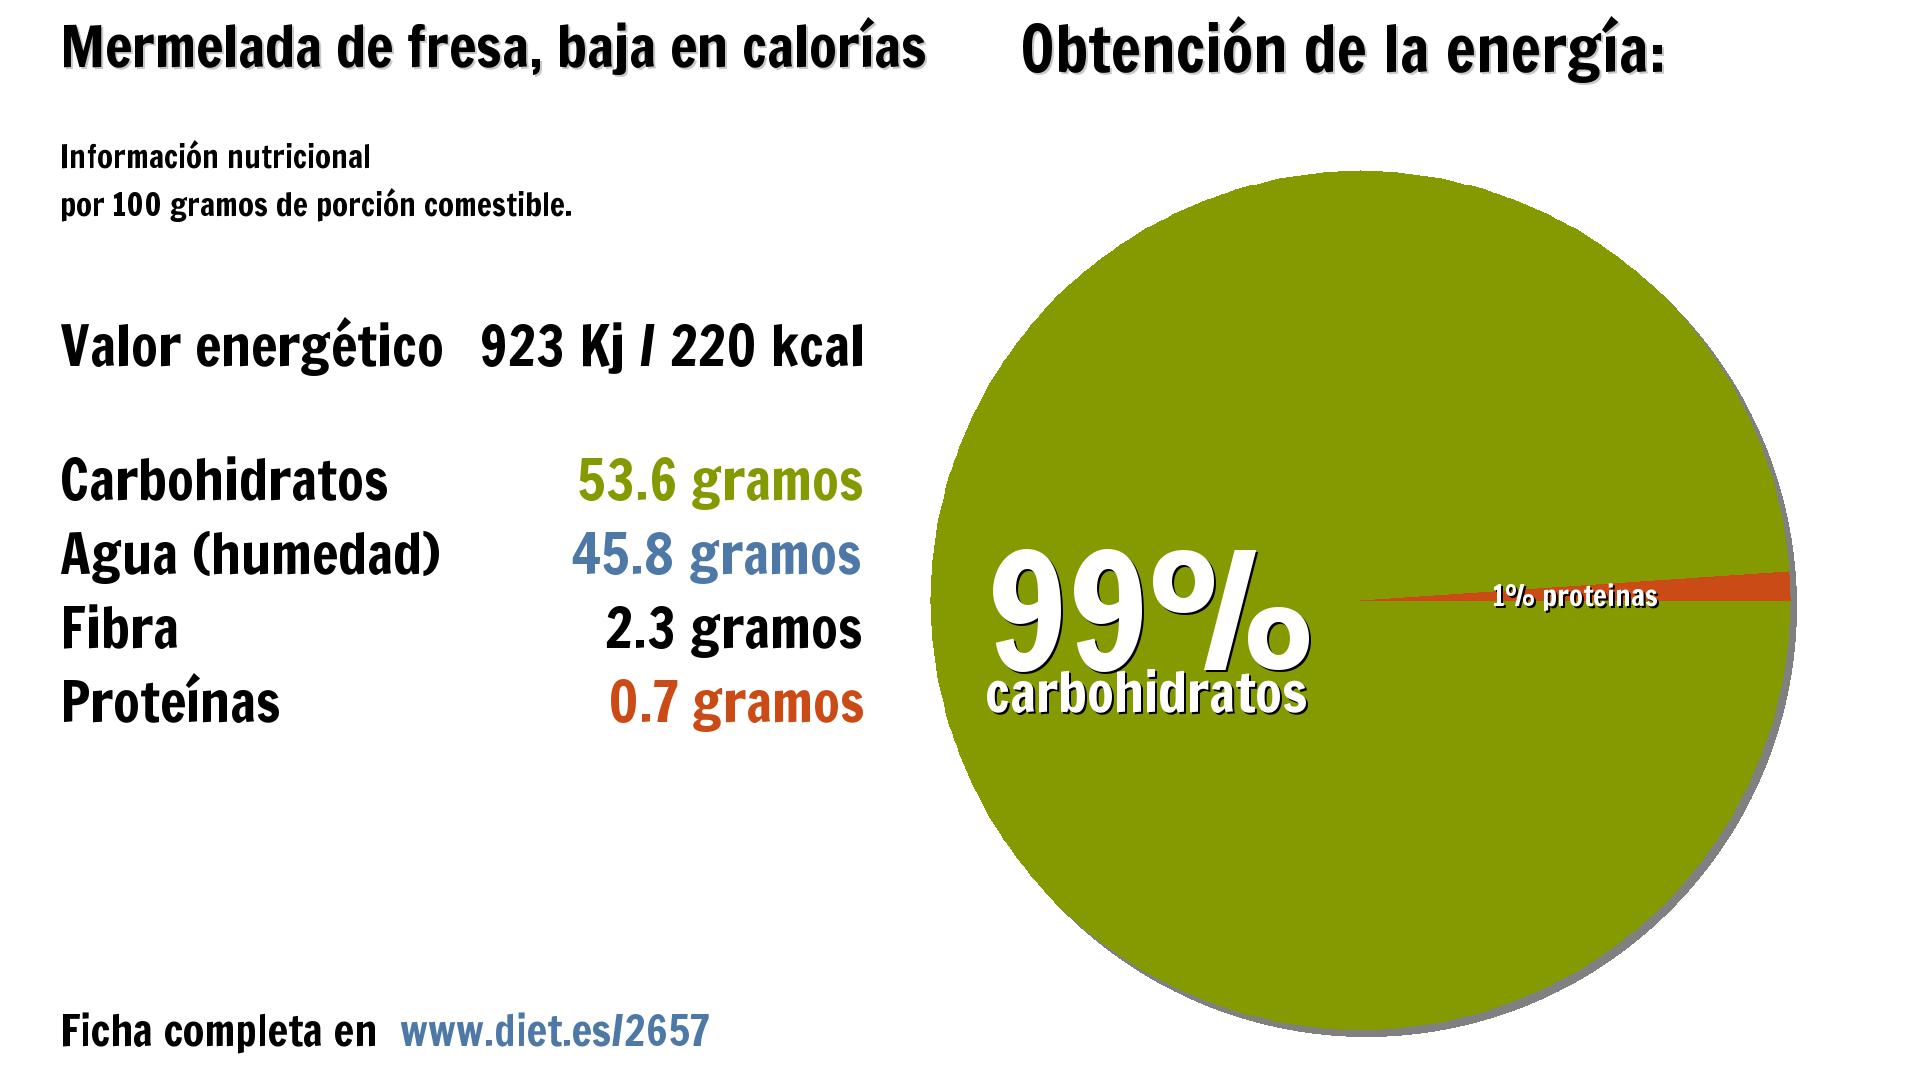 Mermelada de fresa, baja en calorías: energía 923 Kj, carbohidratos 54 g., agua 46 g., fibra 2 g. y proteínas 1 g.